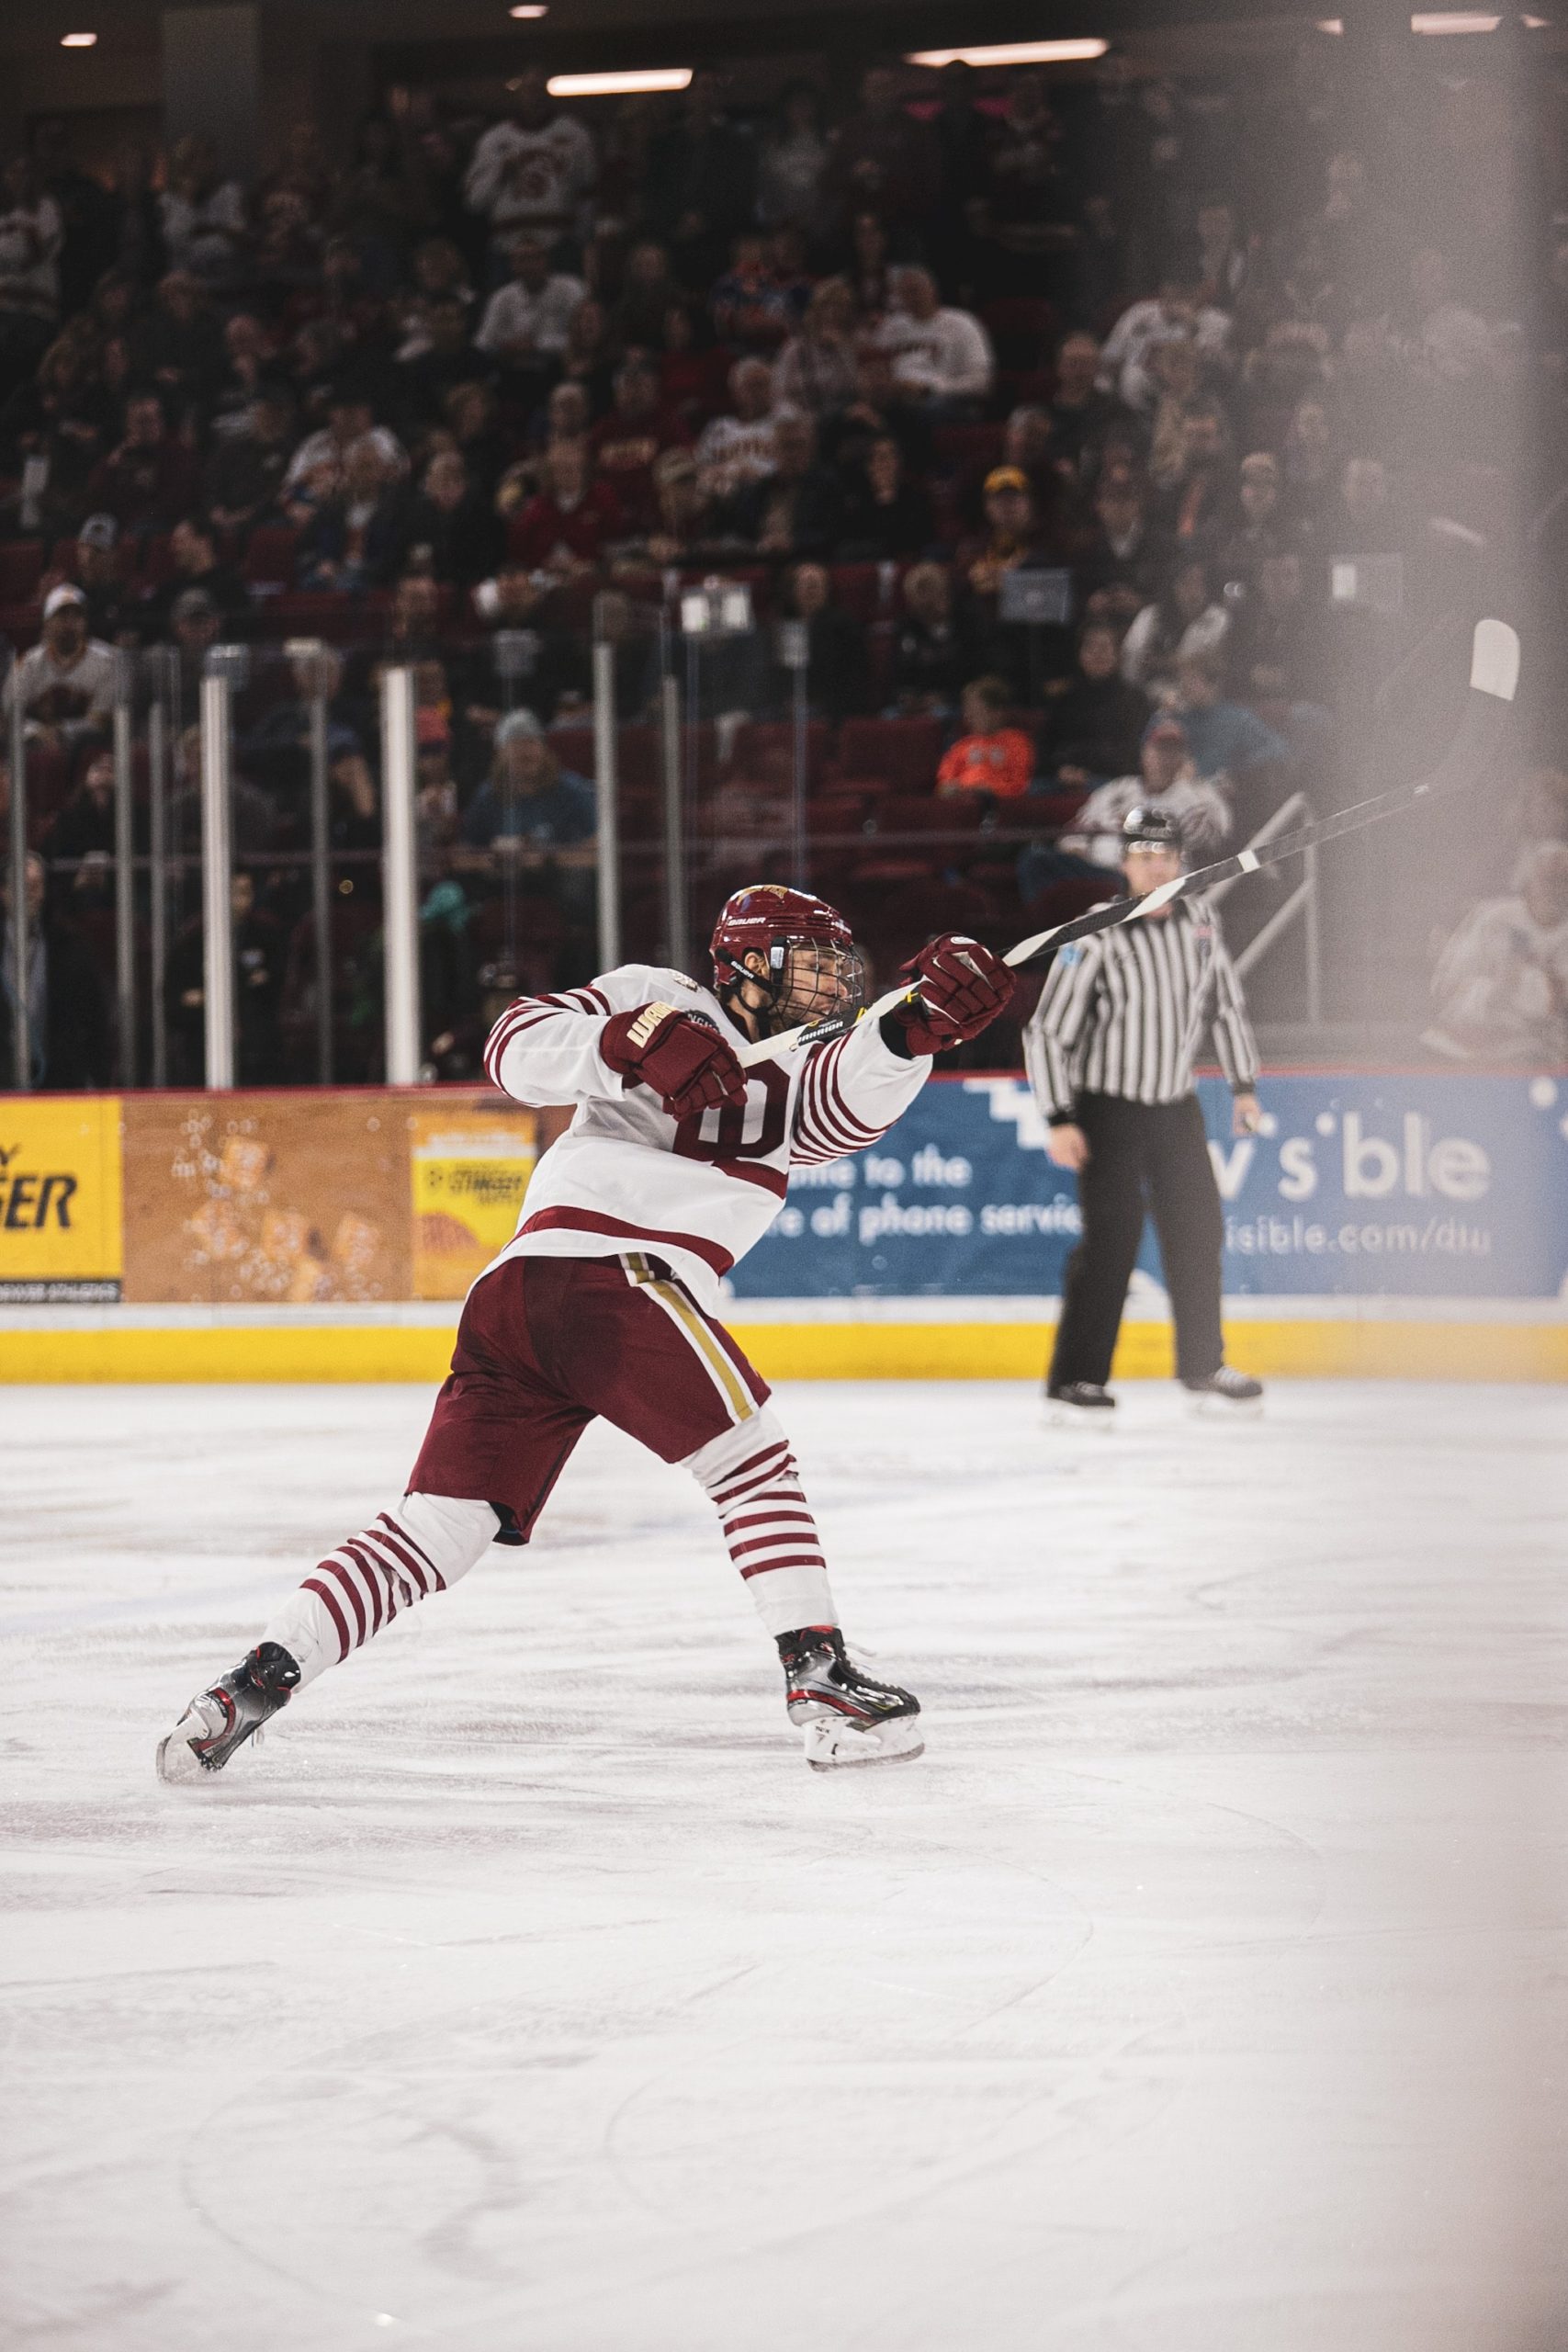 Logan Weaver follows through on a shot during a hockey game.